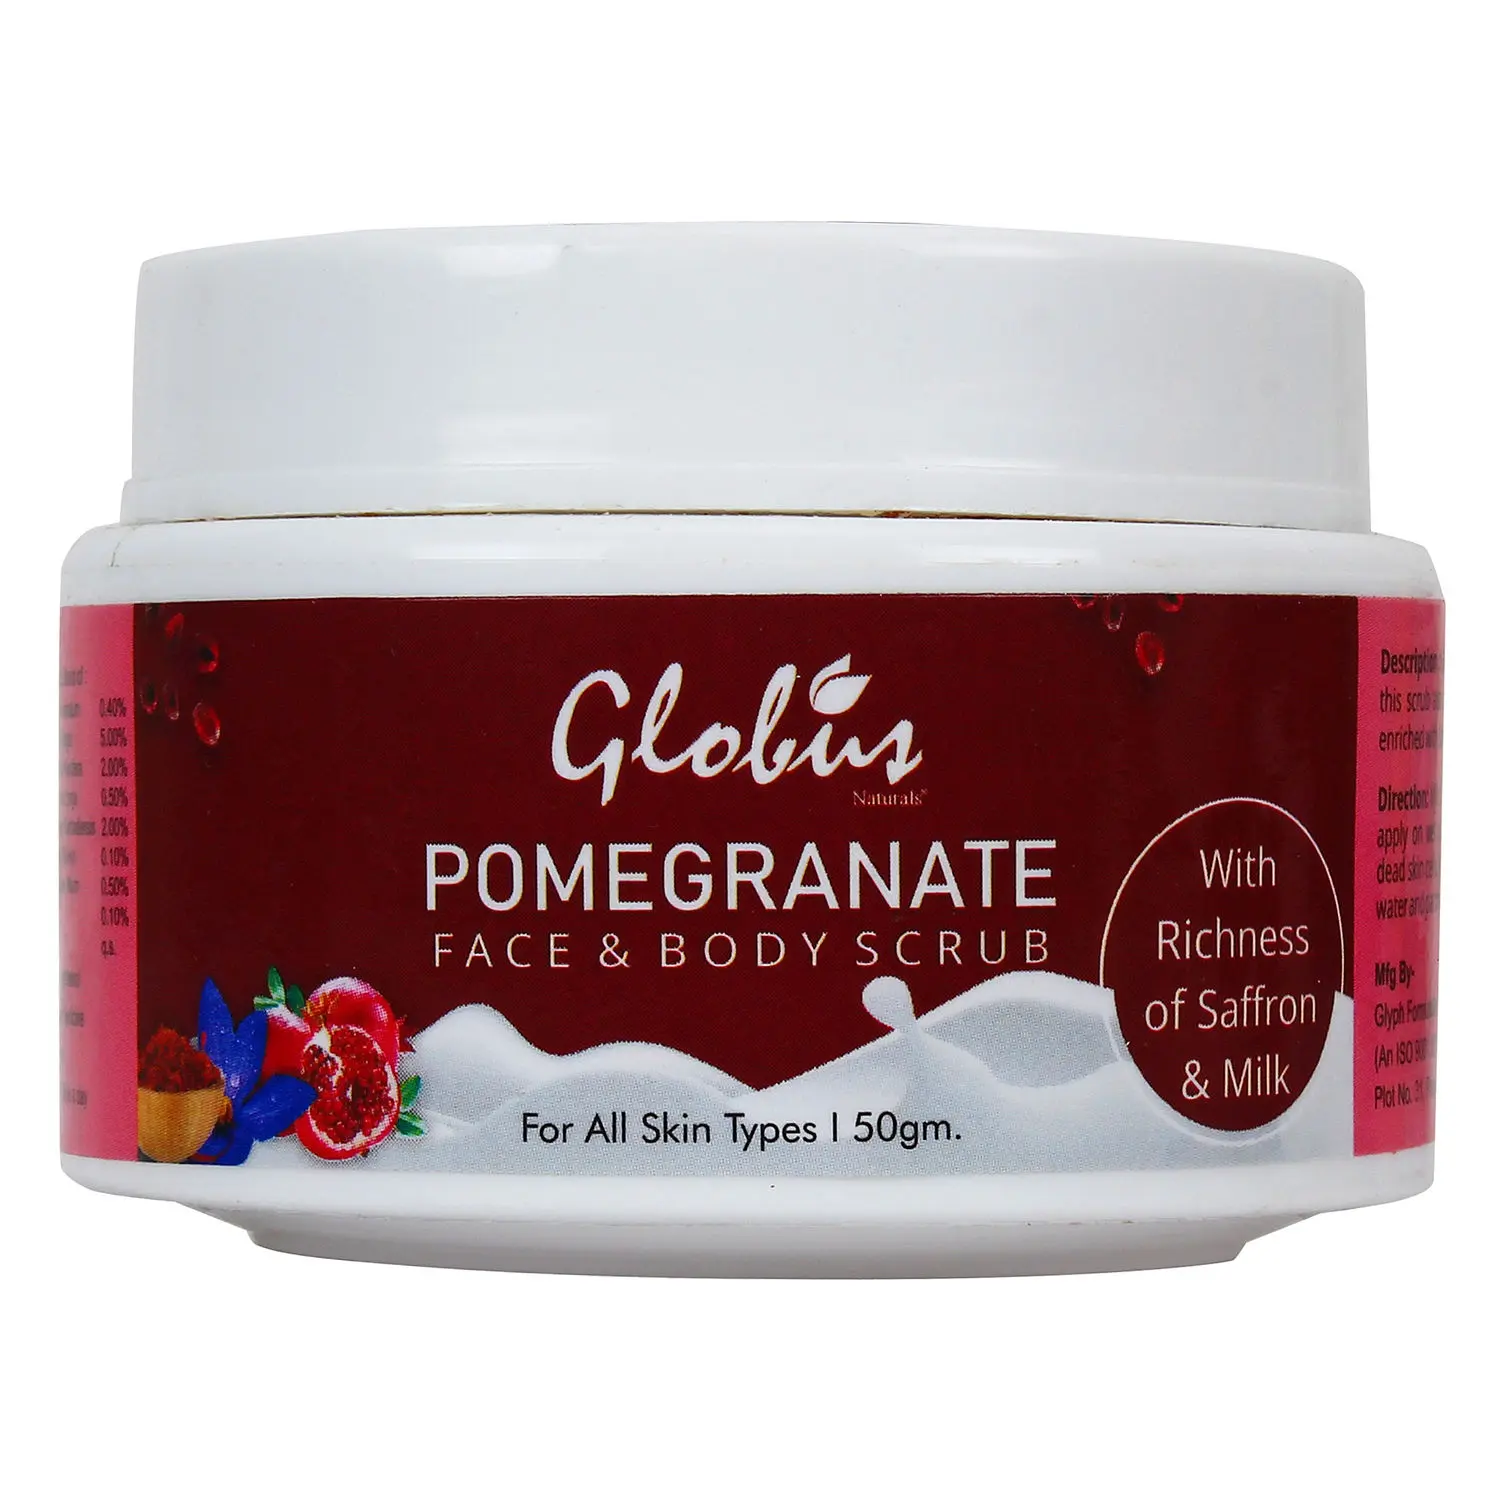 Globus Naturals Pomegranate Face & Body Scrub (50 g)